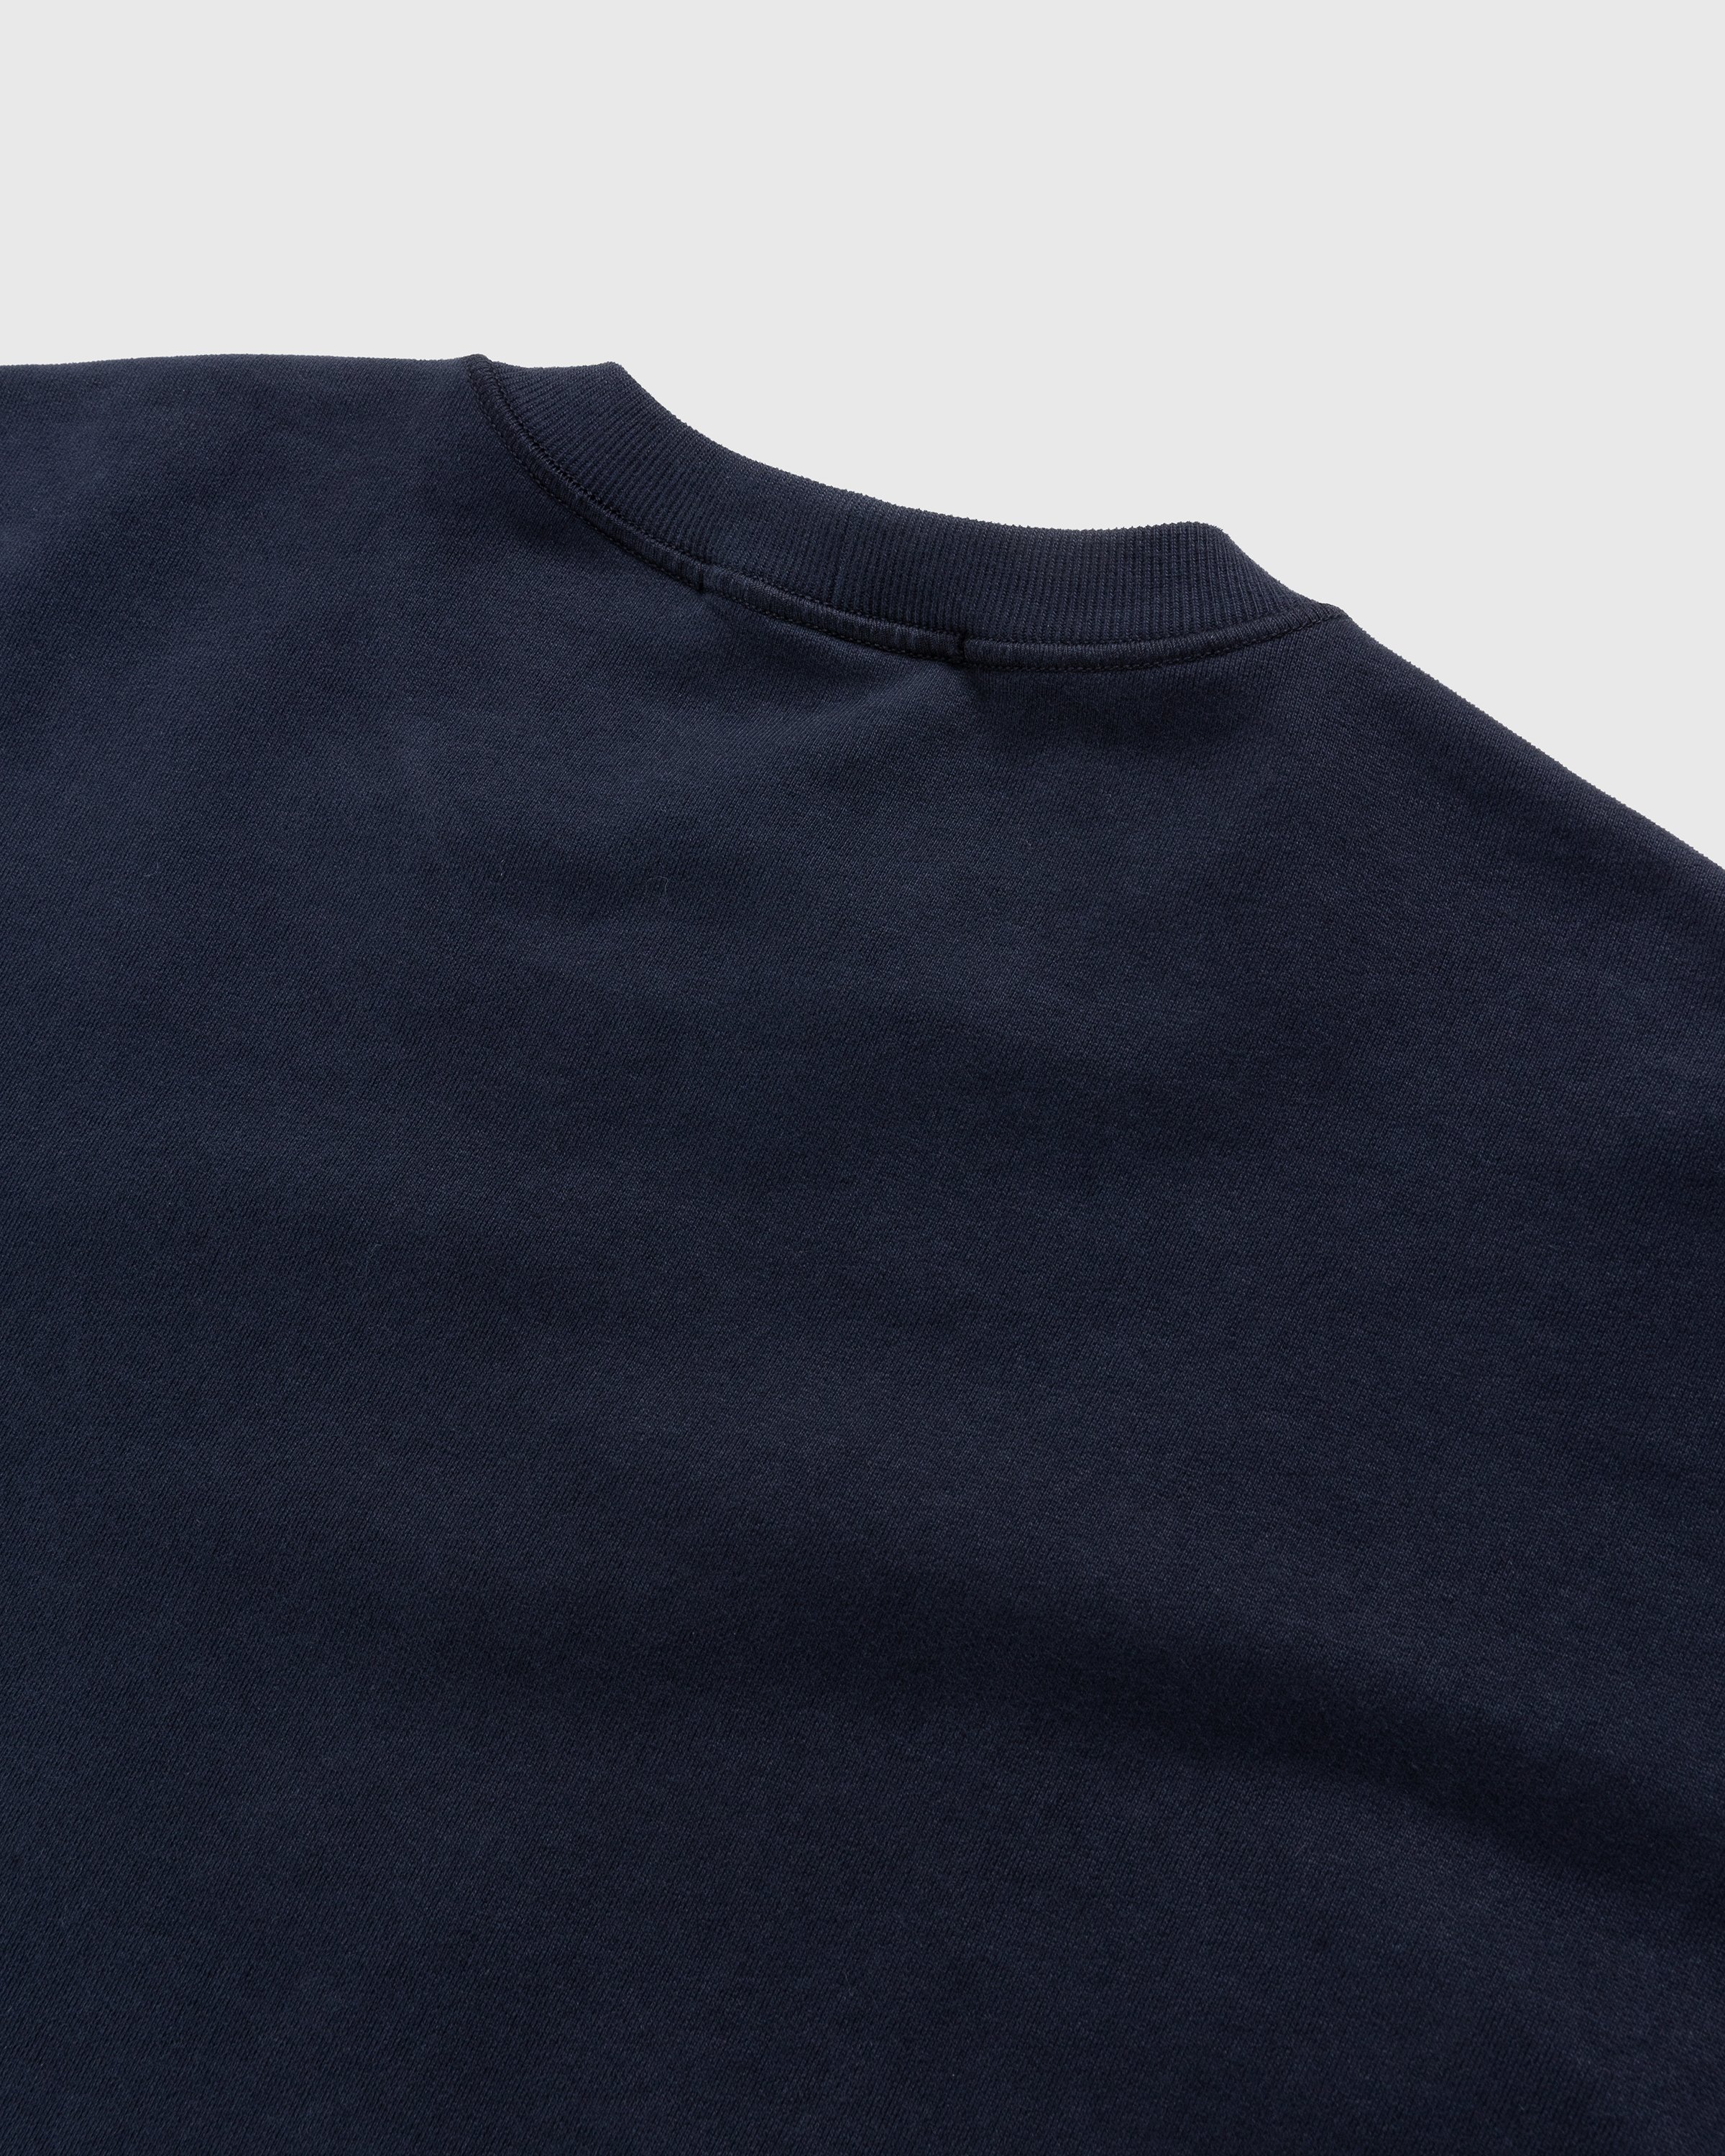 Stone Island - Garment-Dyed Fleece Crewneck Sweatshirt Navy Blue - Clothing - Blue - Image 4